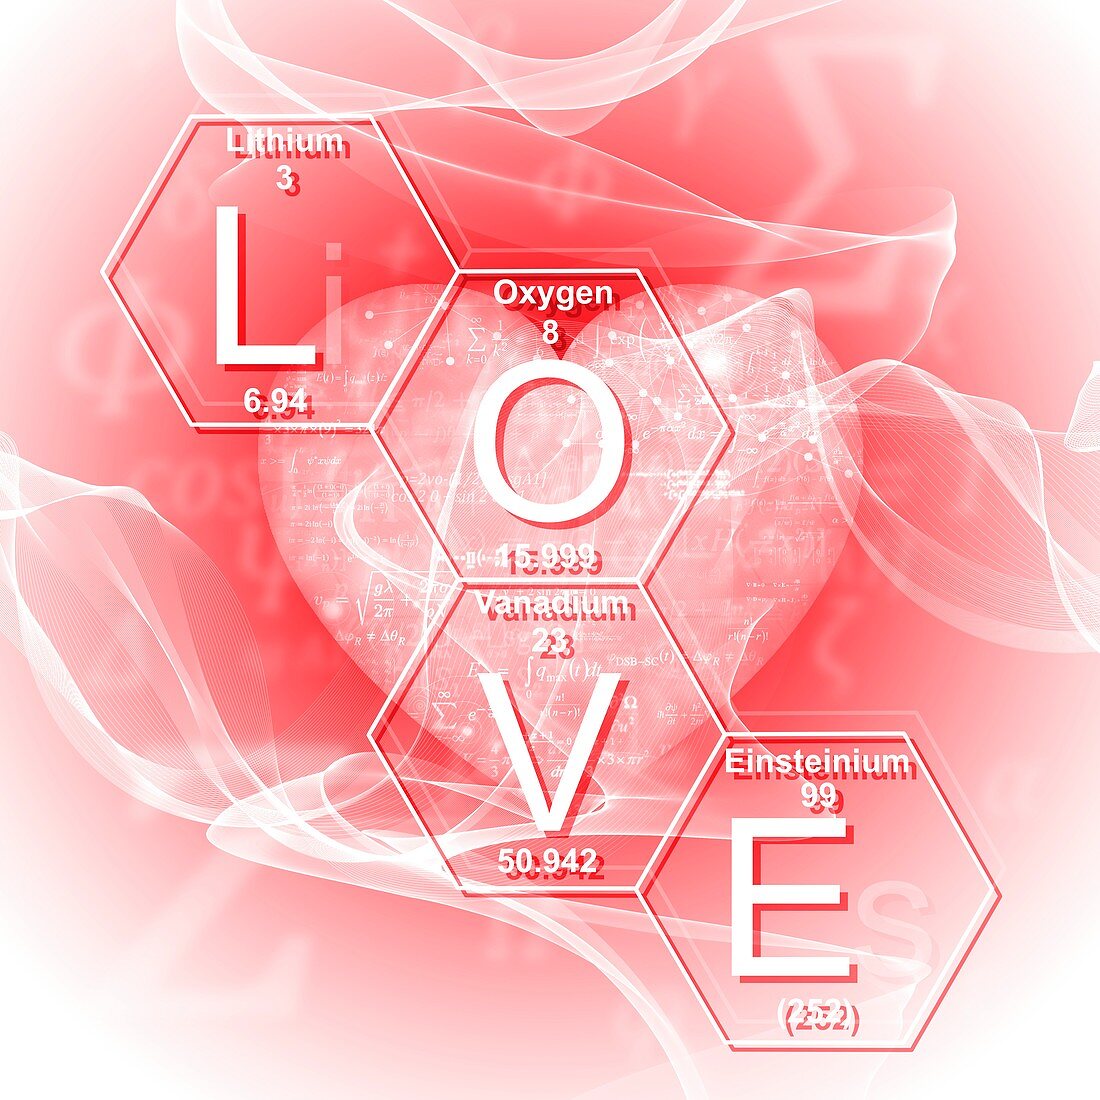 Chemical elements love, illustration